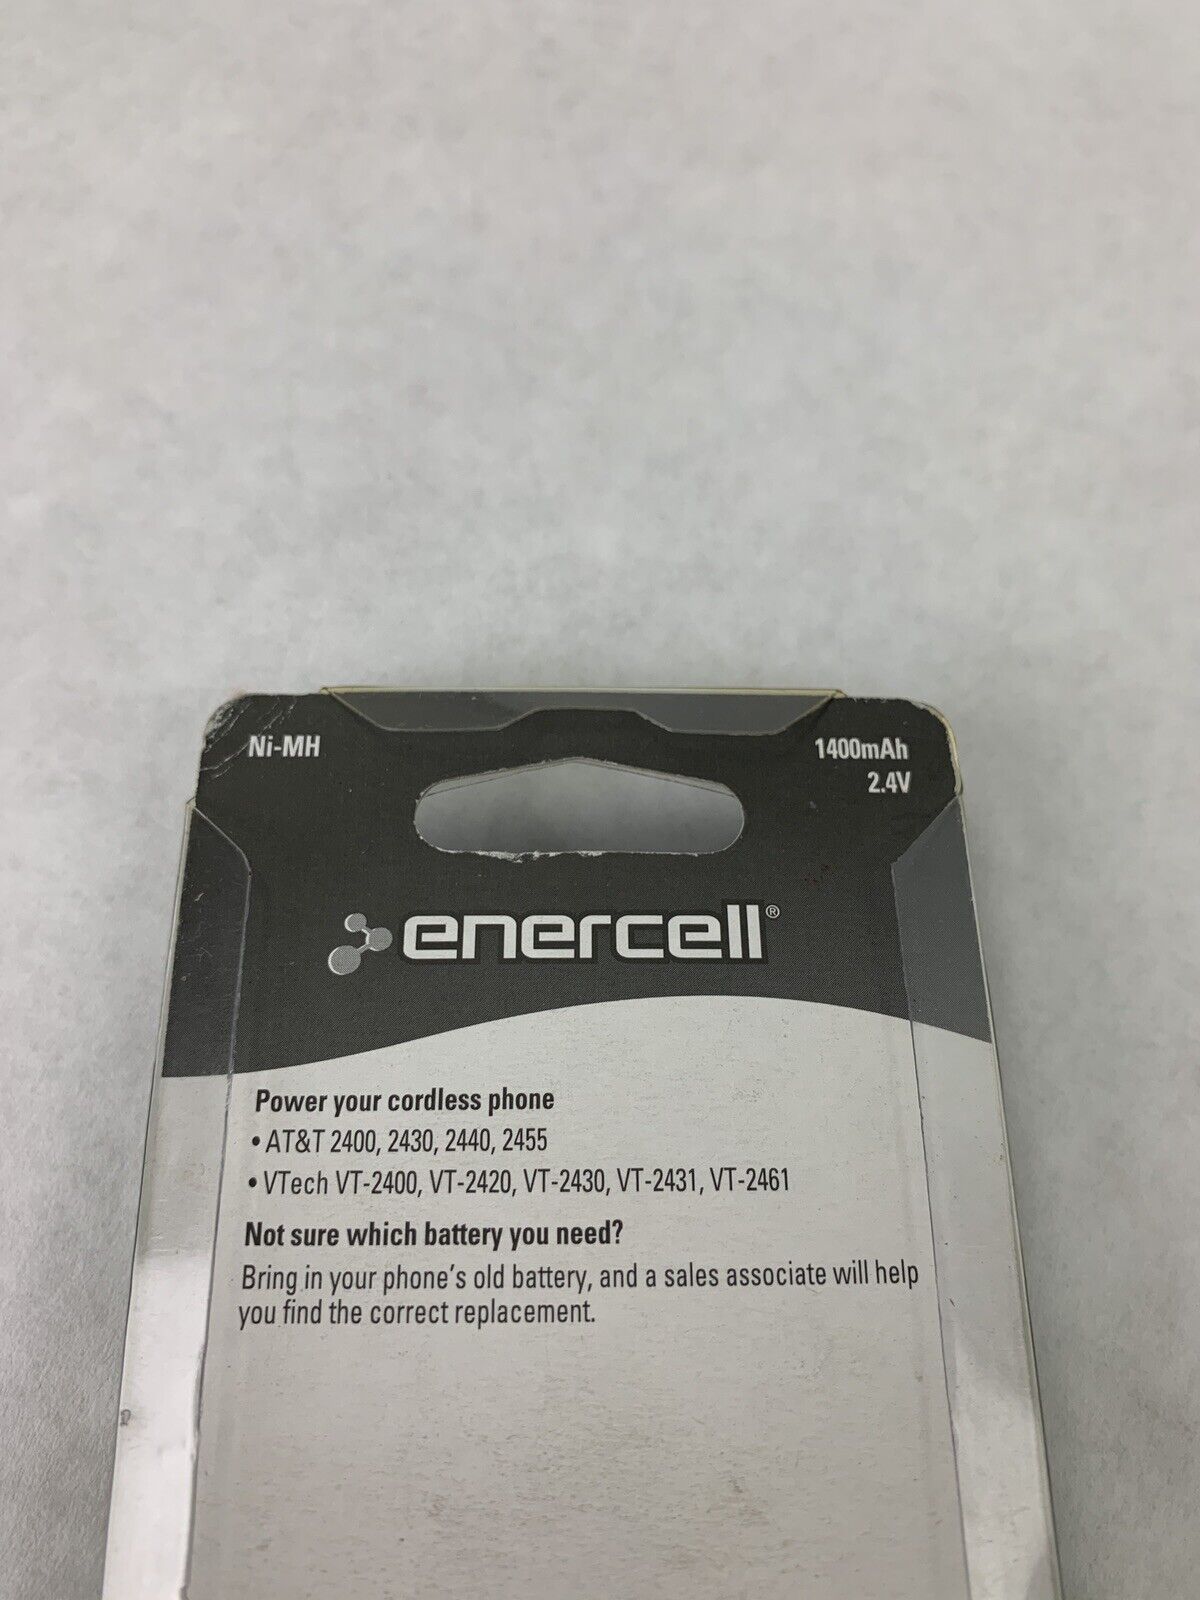 New Enercell Cordless Phone Battery 2.4V 1400 mAh 23-898